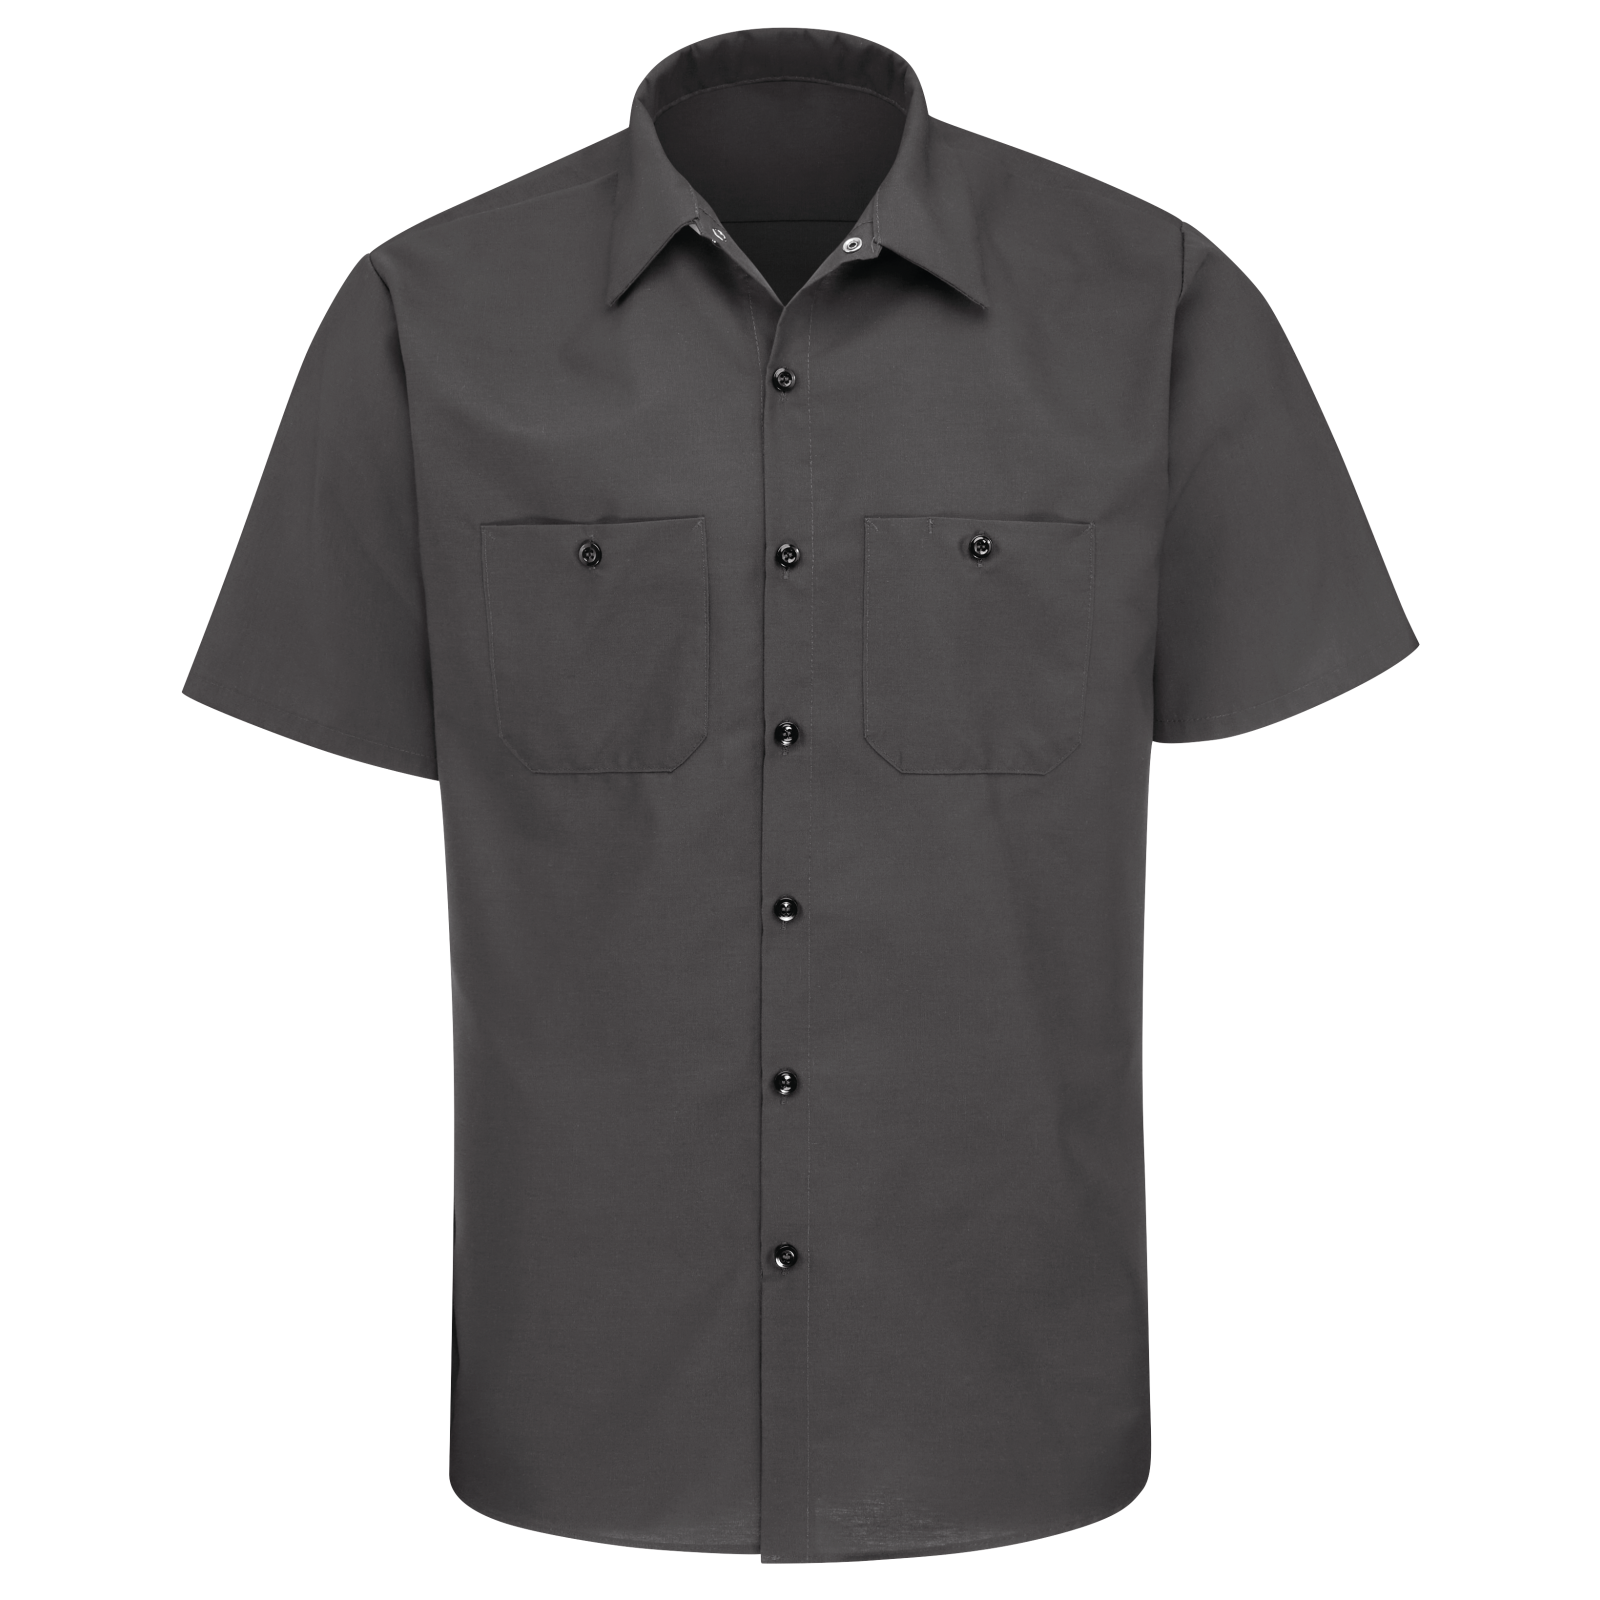 Red Kap Mens Short Sleeve Industrial Work Shirt Spruce Green Size M,L,XL $13.99 